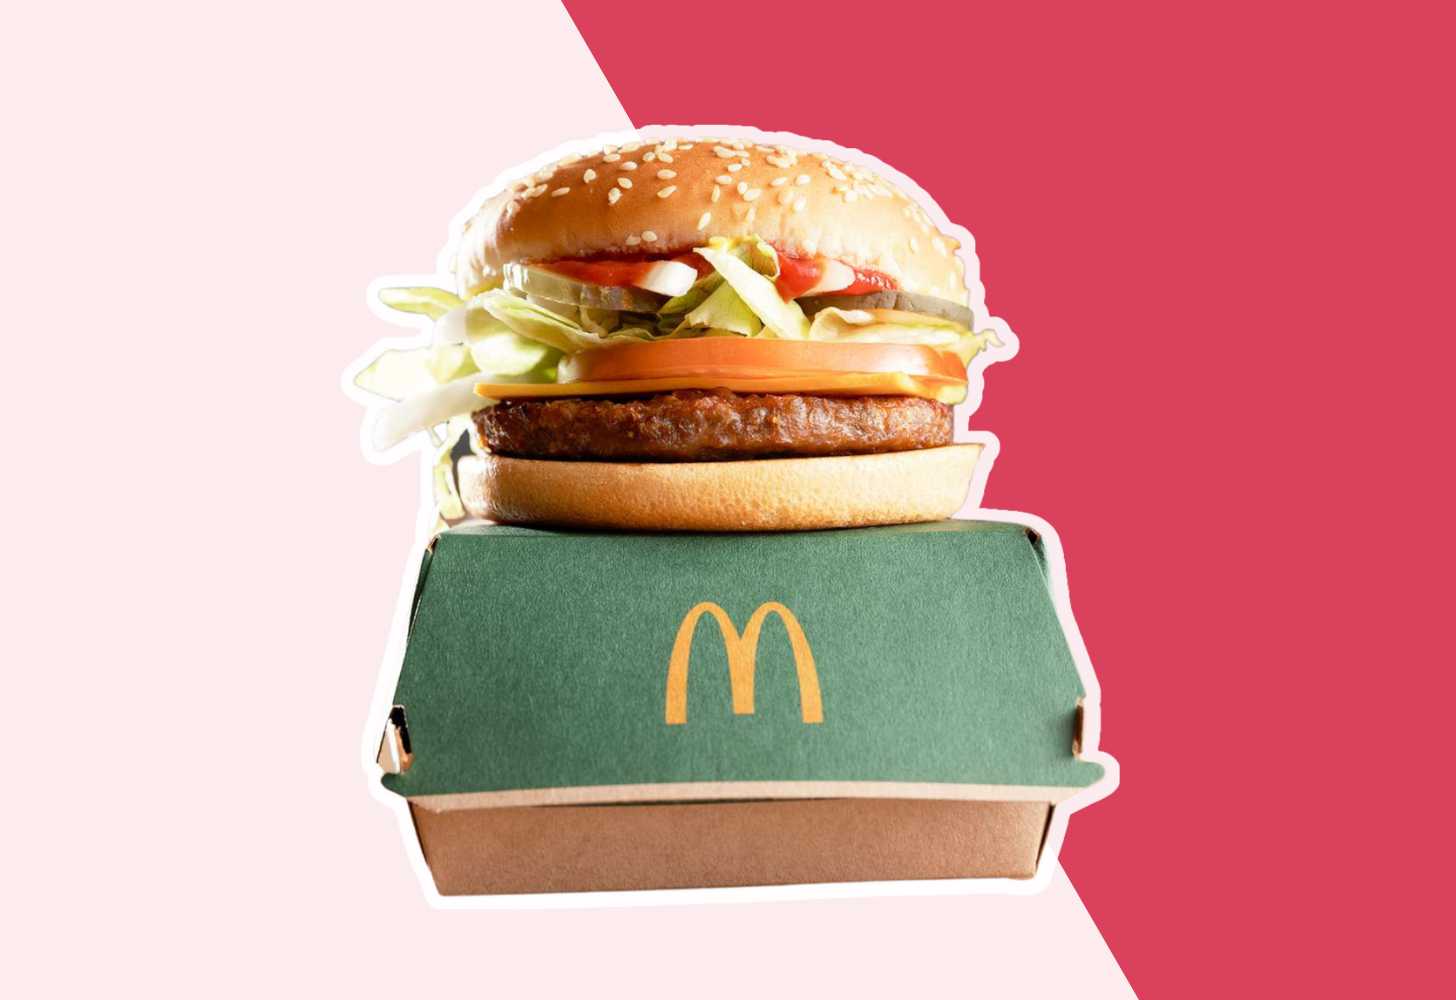 McPlant Burger from McDonald's